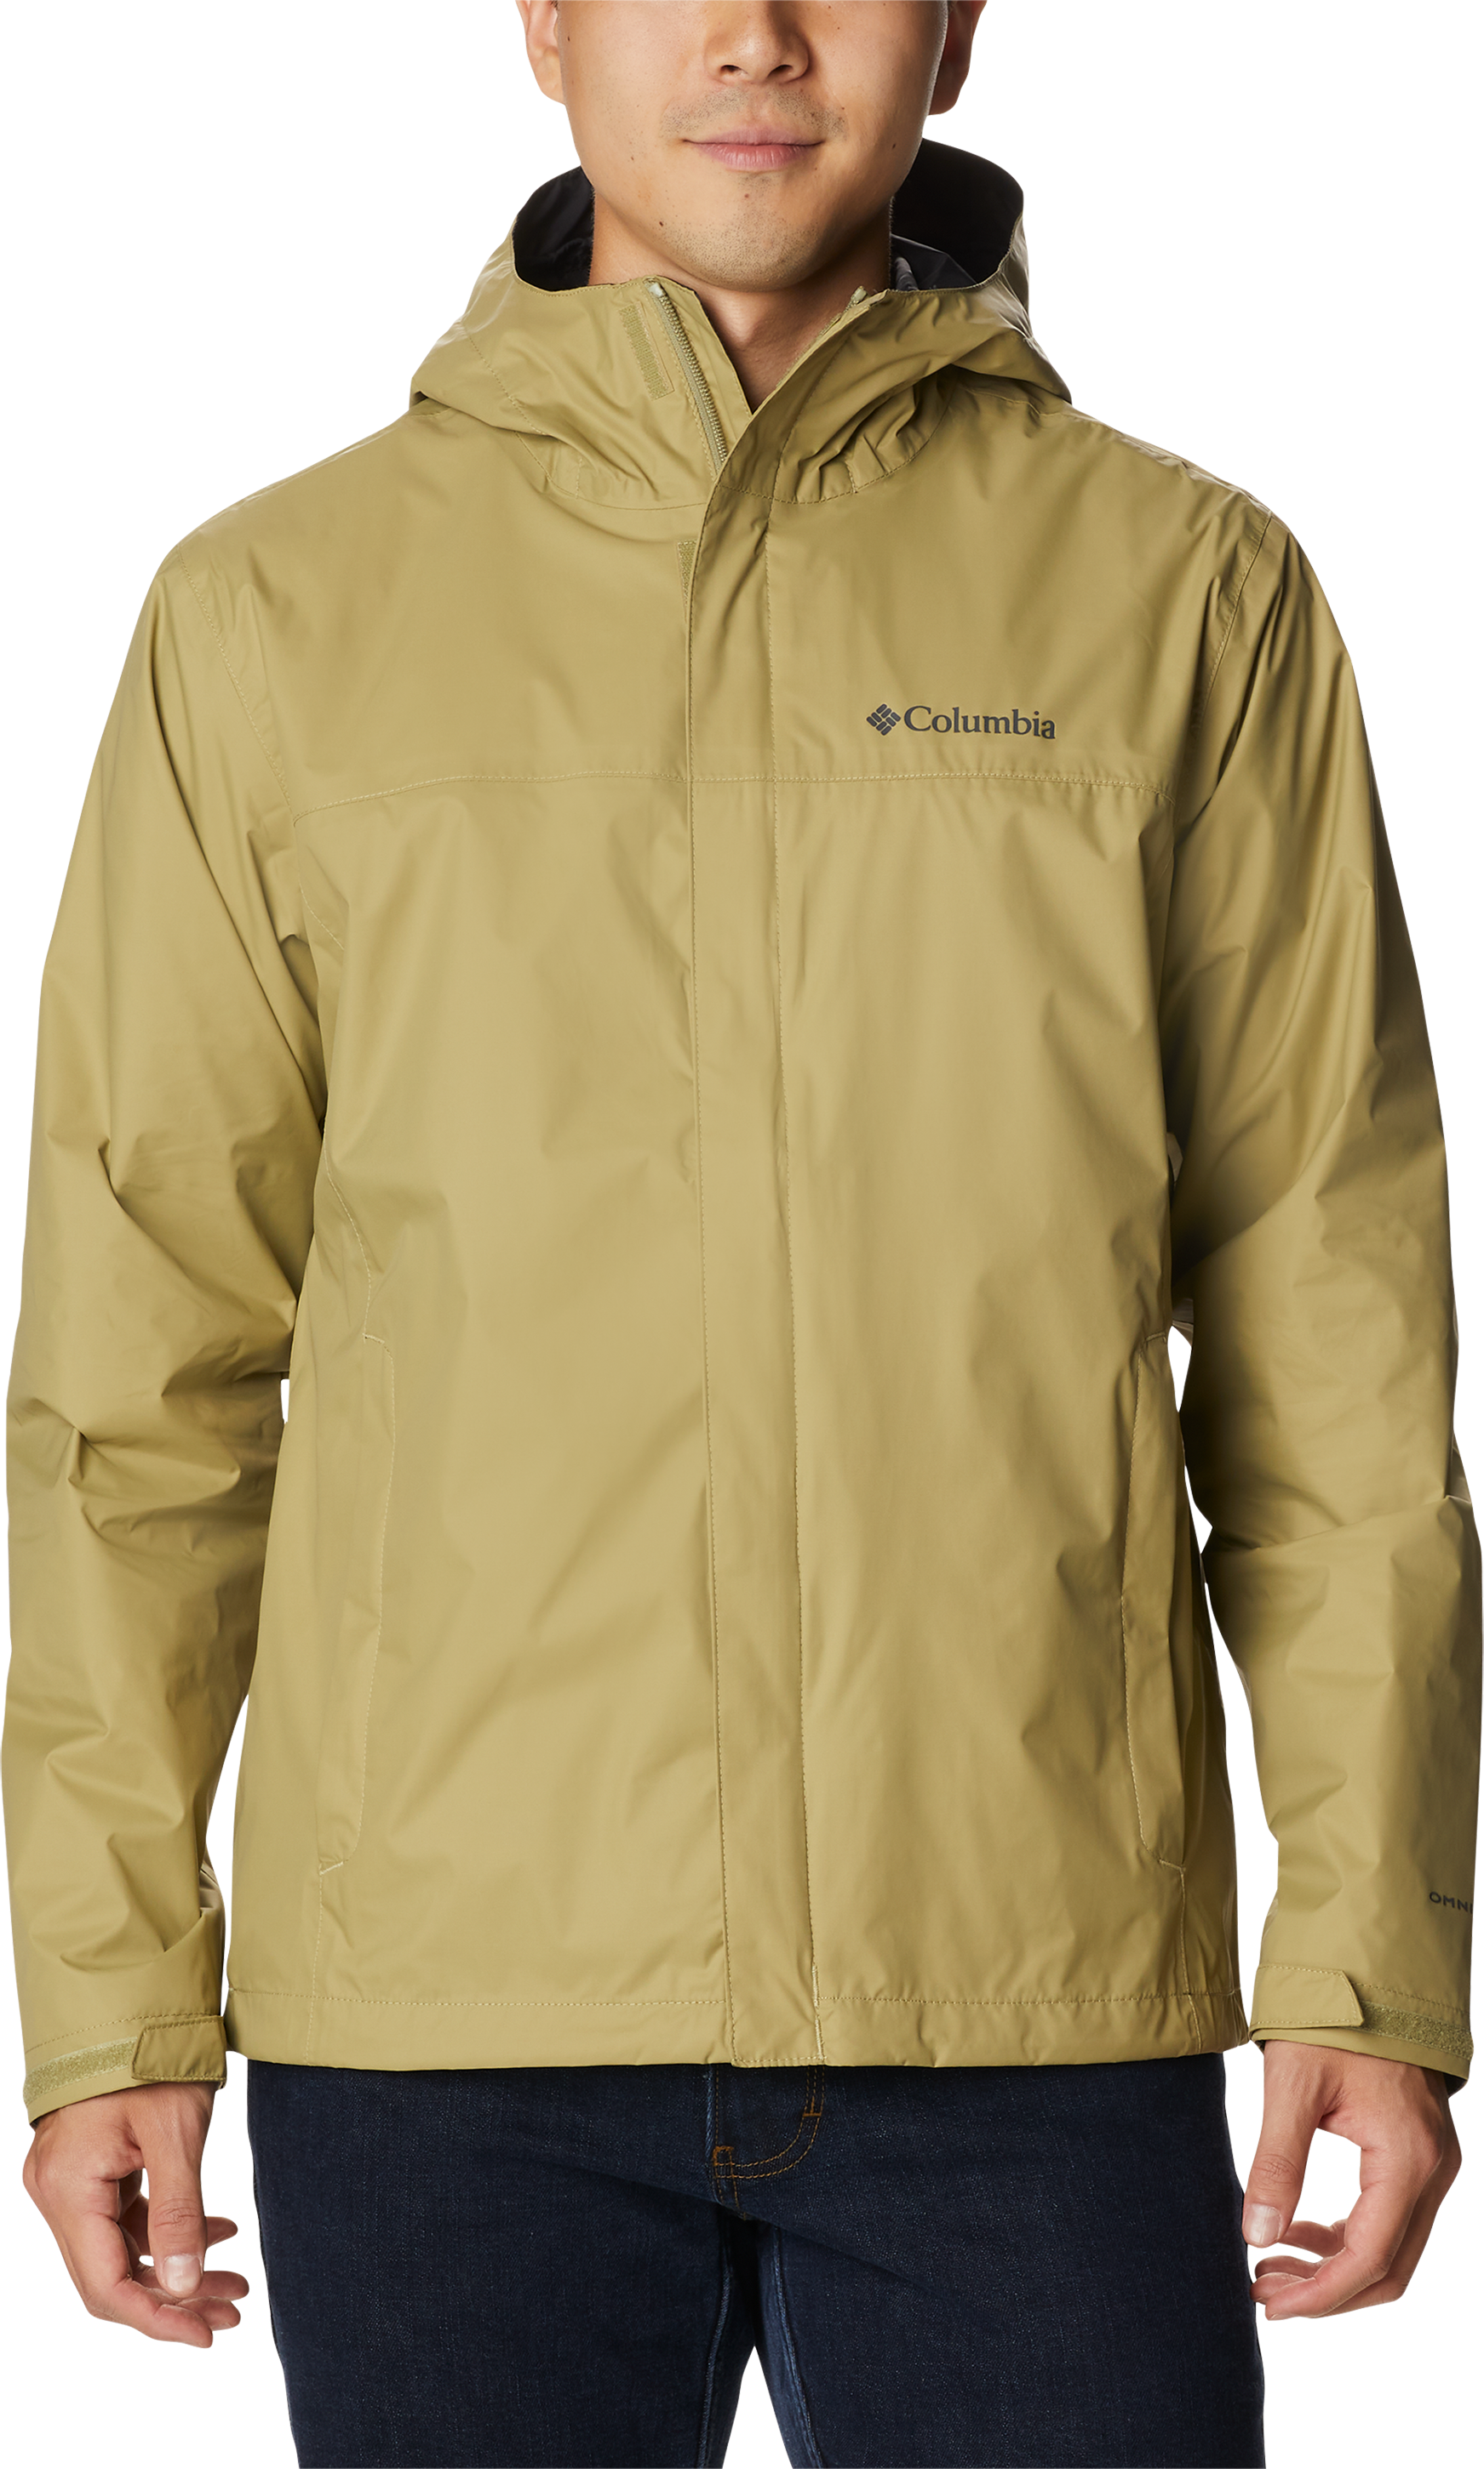 Columbia Watertight II Jacket for Men - Savory Green - 2XL